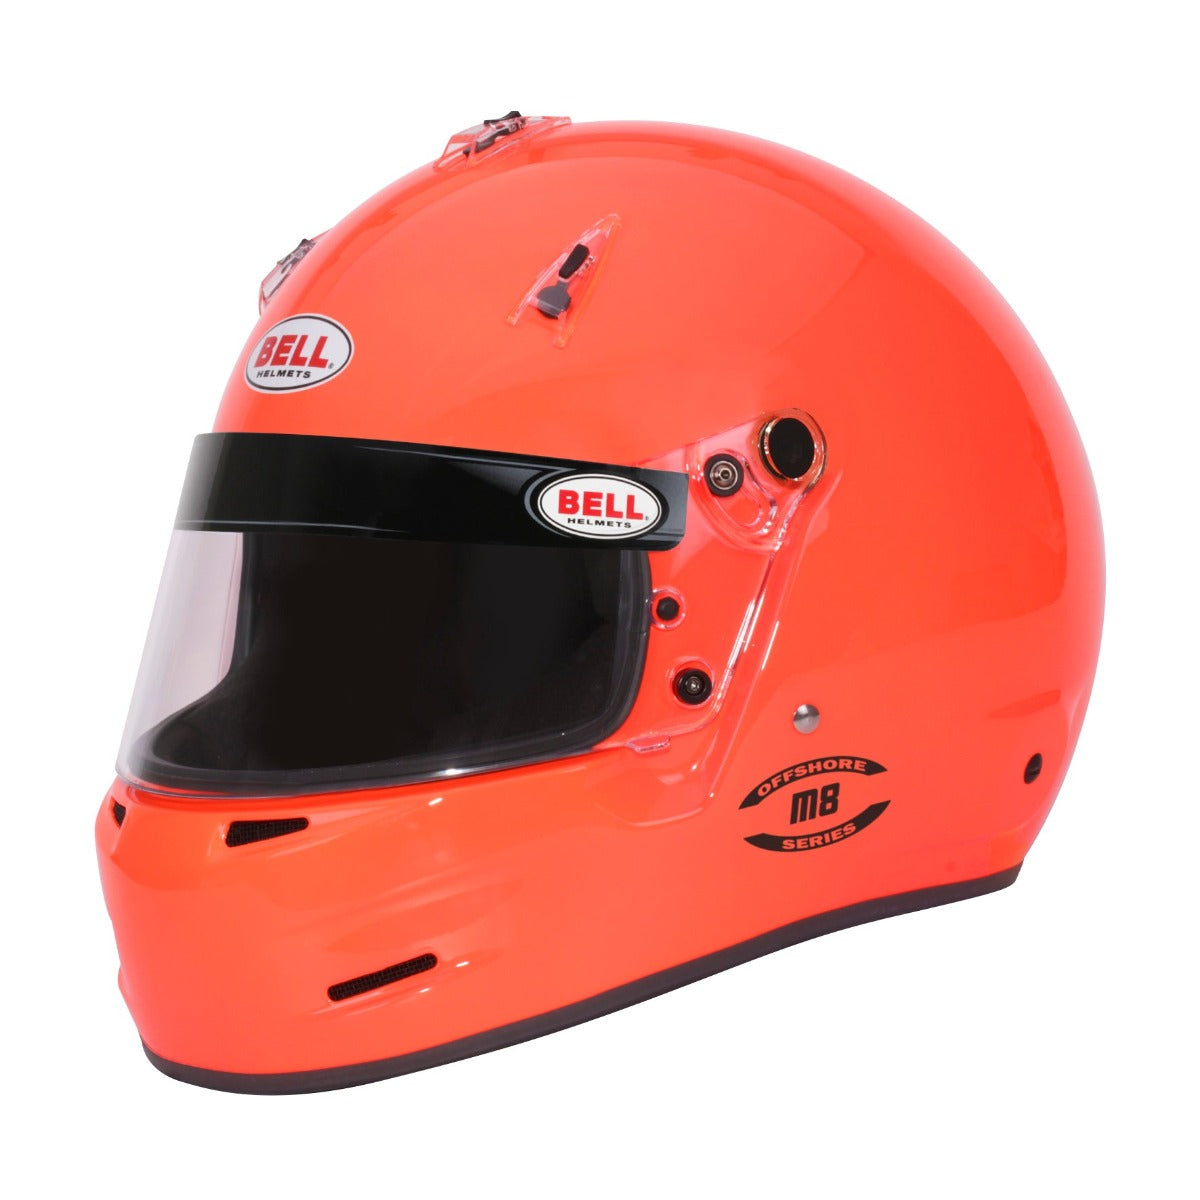 Bell M.8 Helmet SA2020 orange - Front View Image